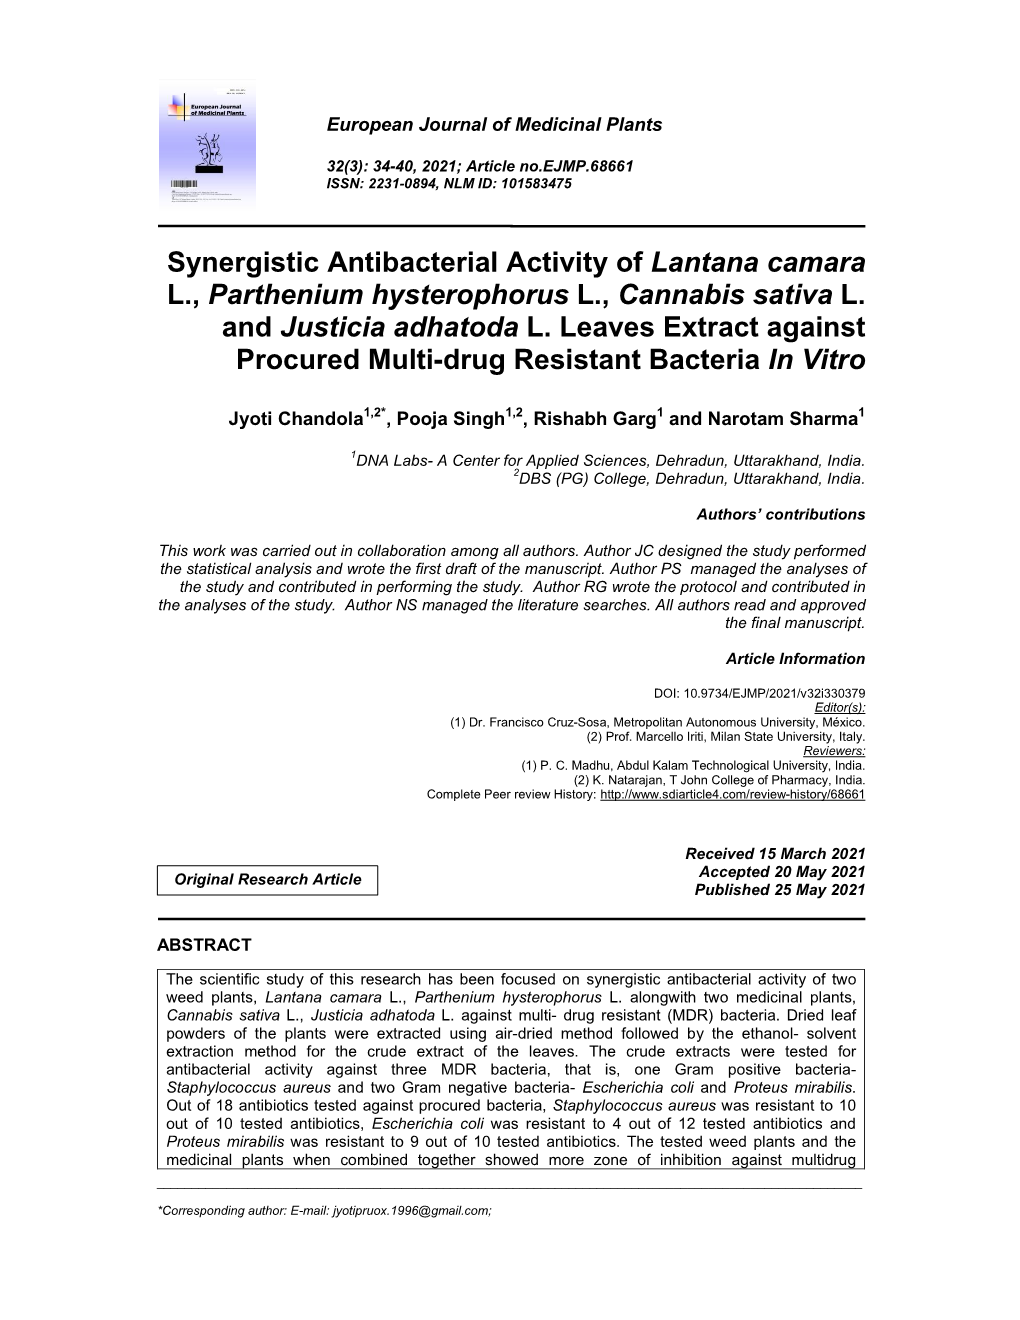 Synergistic Antibacterial Activity of Lantana Camara L., Parthenium Hysterophorus L., Cannabis Sativa L